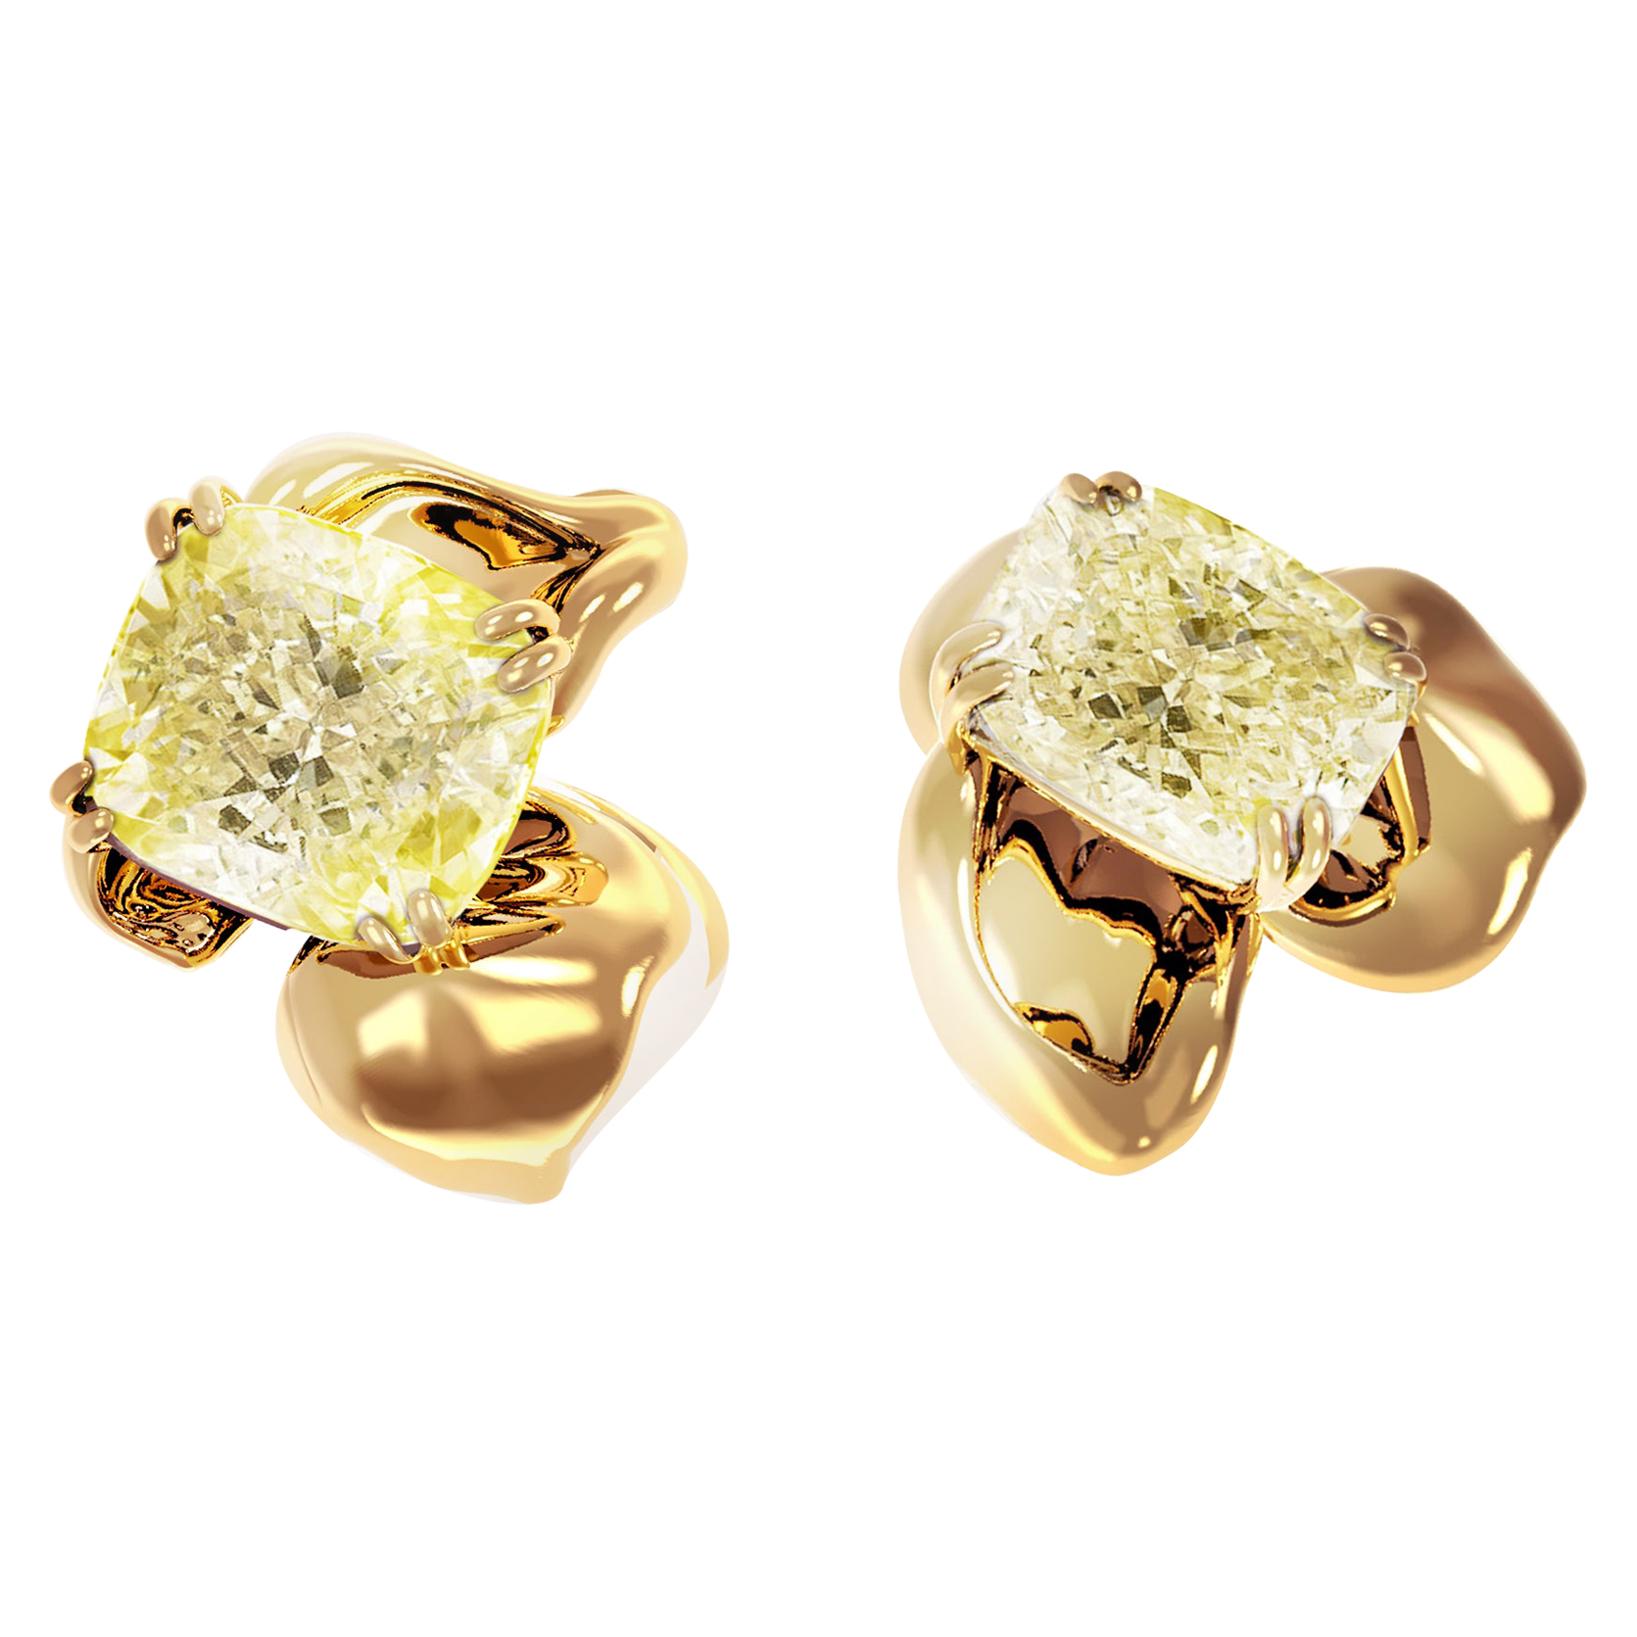 18 Karat Gold Clip-on Earrings with 2 Carat GIA Certified Yellow Diamonds